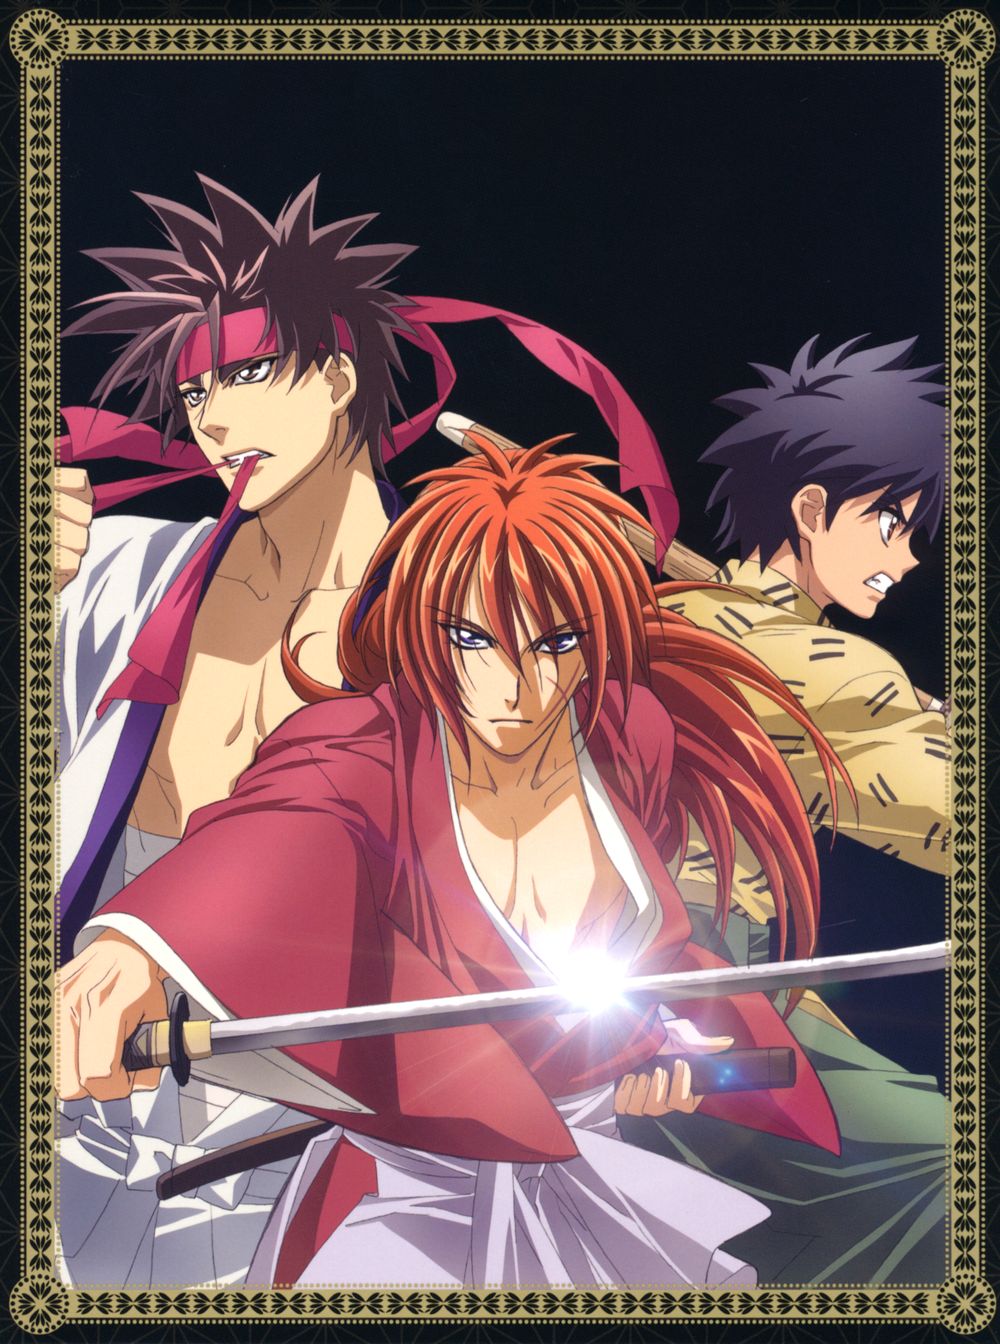 [VCB-Studio] Rurouni Kenshin / 浪客剑心 追忆篇 + 星霜篇 + 维新志士镇魂歌 10-bit 1080p AVC BDRip [OVA + MOVIE Reseed Fin]插图icecomic动漫-云之彼端,约定的地方(´･ᴗ･`)2